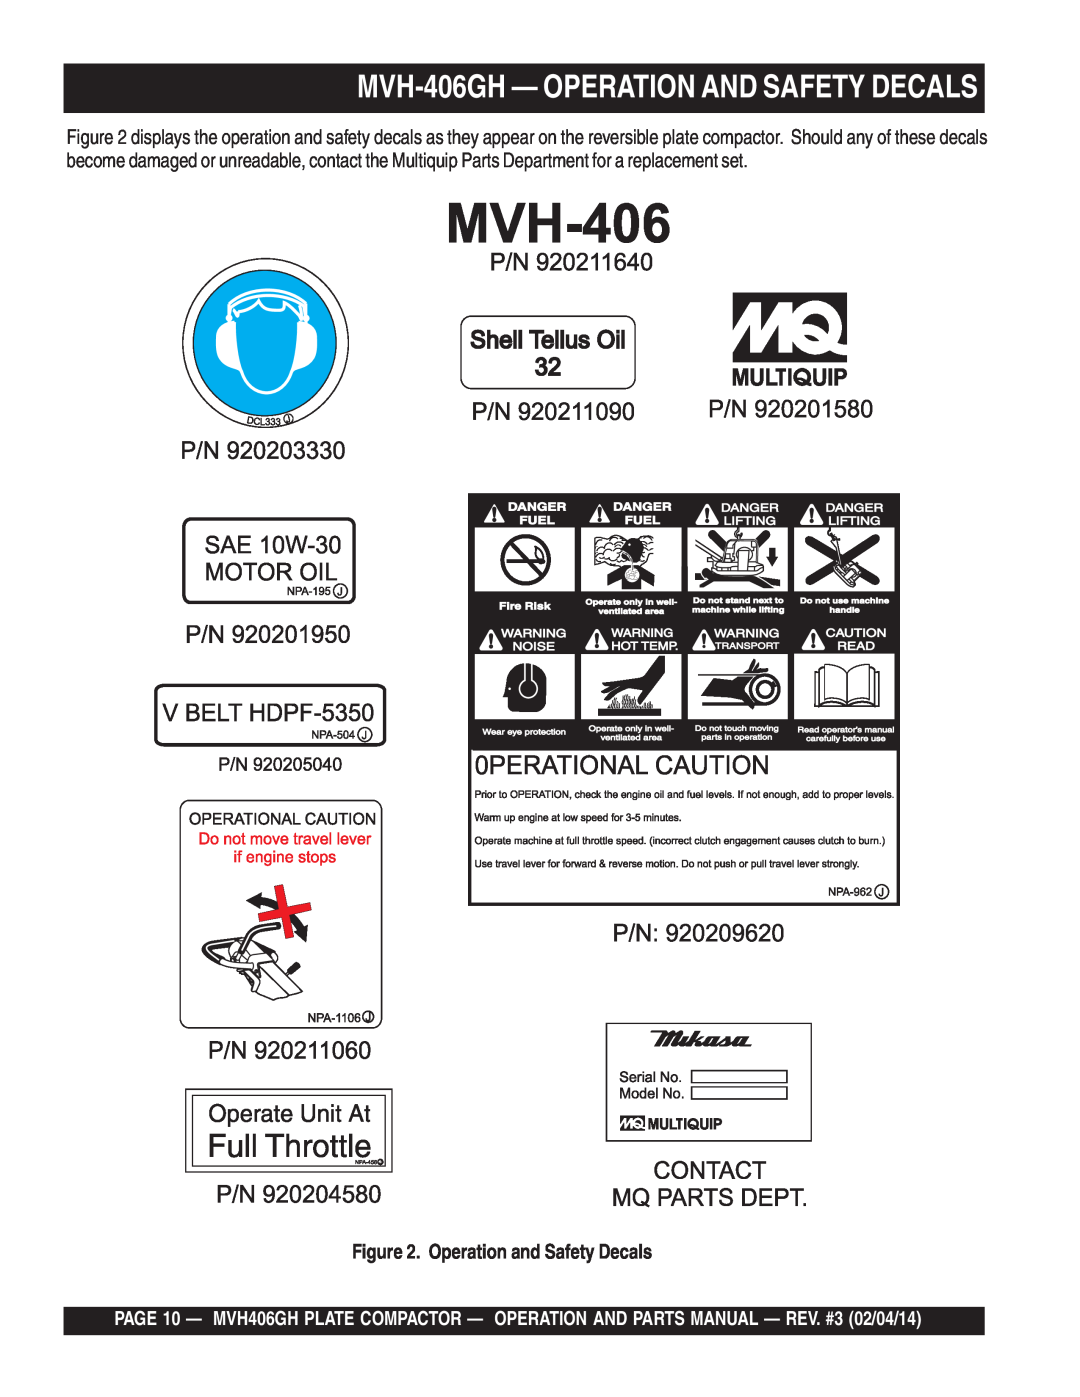 Multiquip MVH406GH manual MVH-406GH - OPERATION AND SAFETY DECALS, Operation and Safety Decals 